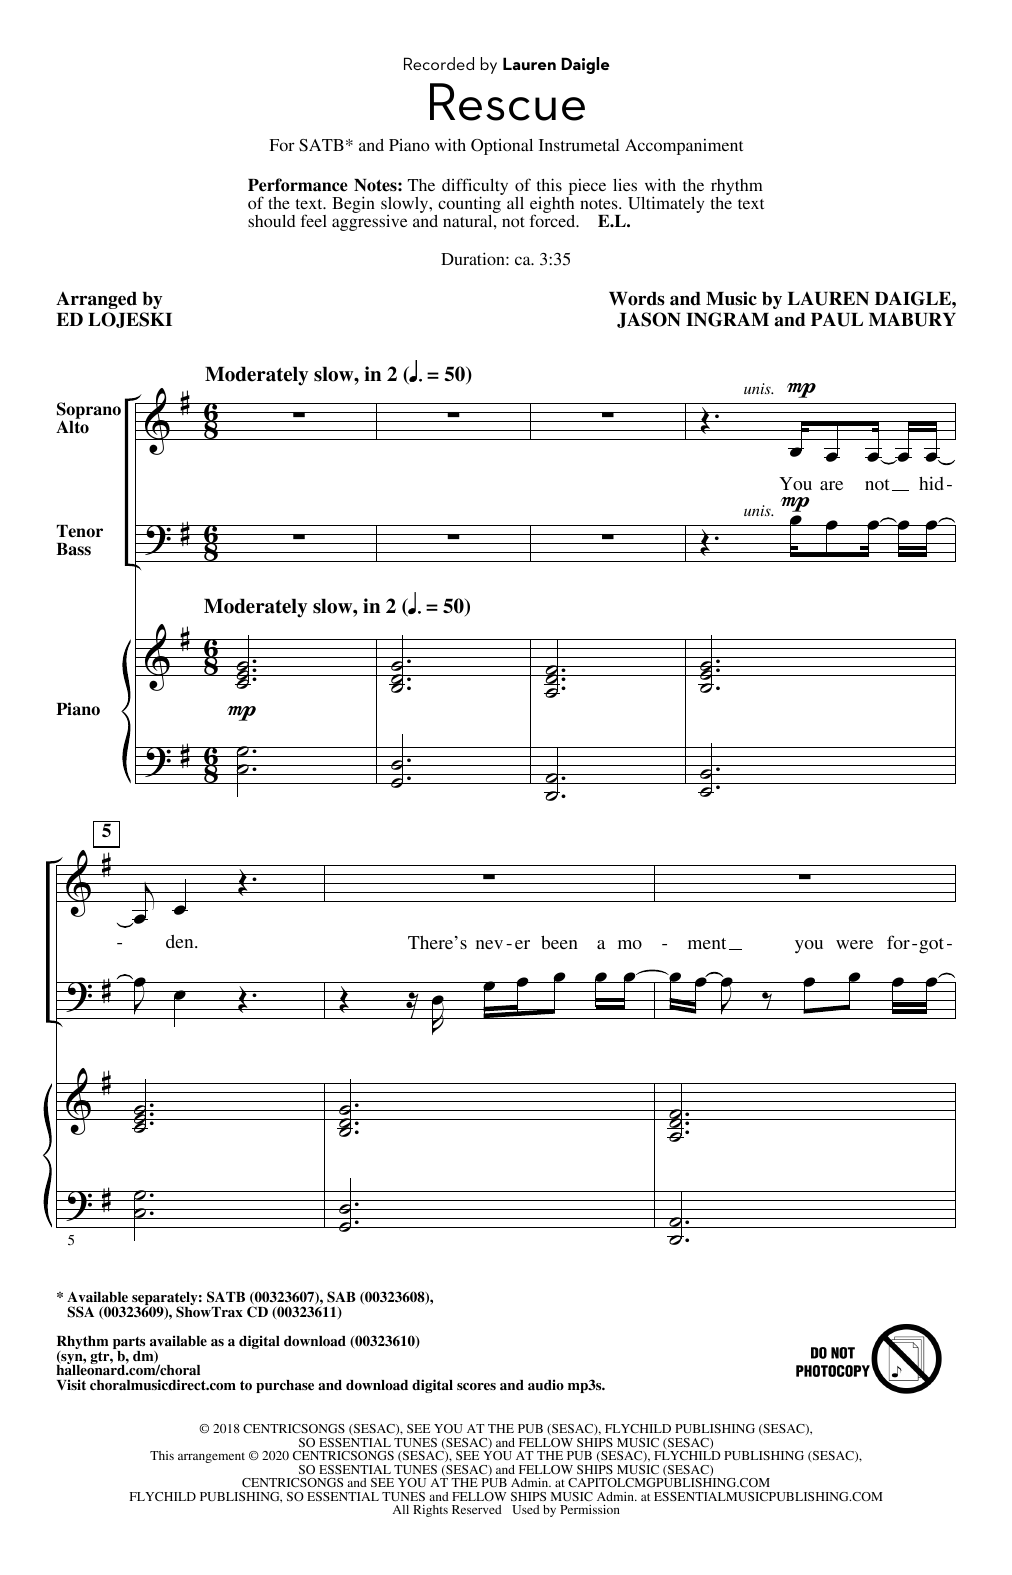 Lauren Daigle Rescue (arr. Ed Lojeski) Sheet Music Notes & Chords for SSA Choir - Download or Print PDF